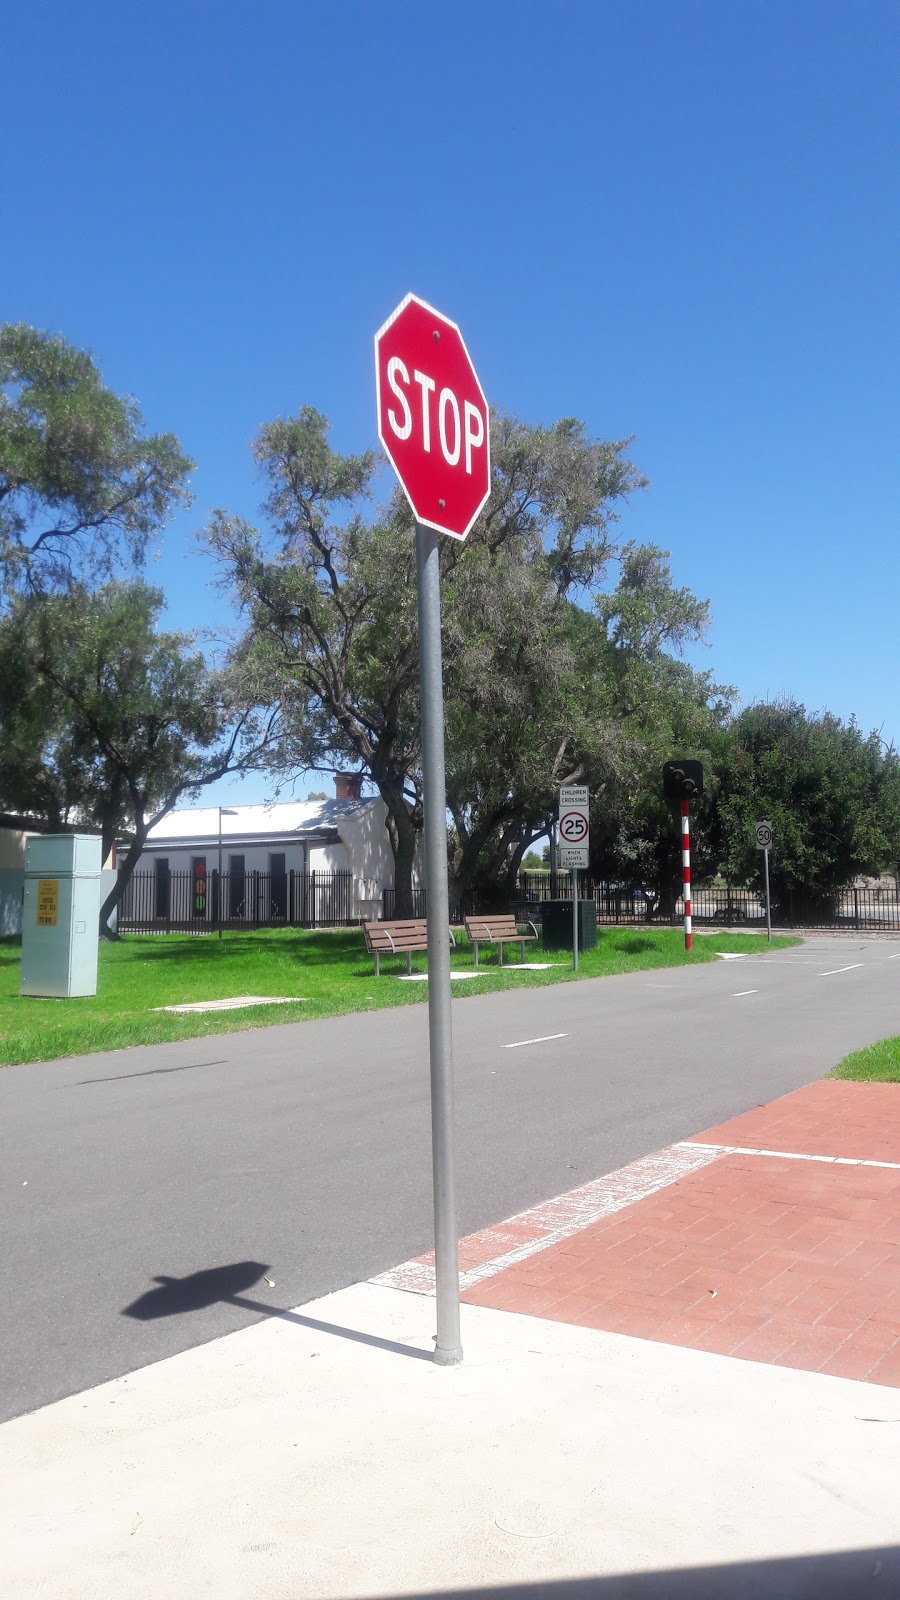 Road Safety Centre | Port Rd, Adelaide SA 5000, Australia | Phone: (08) 8207 4668